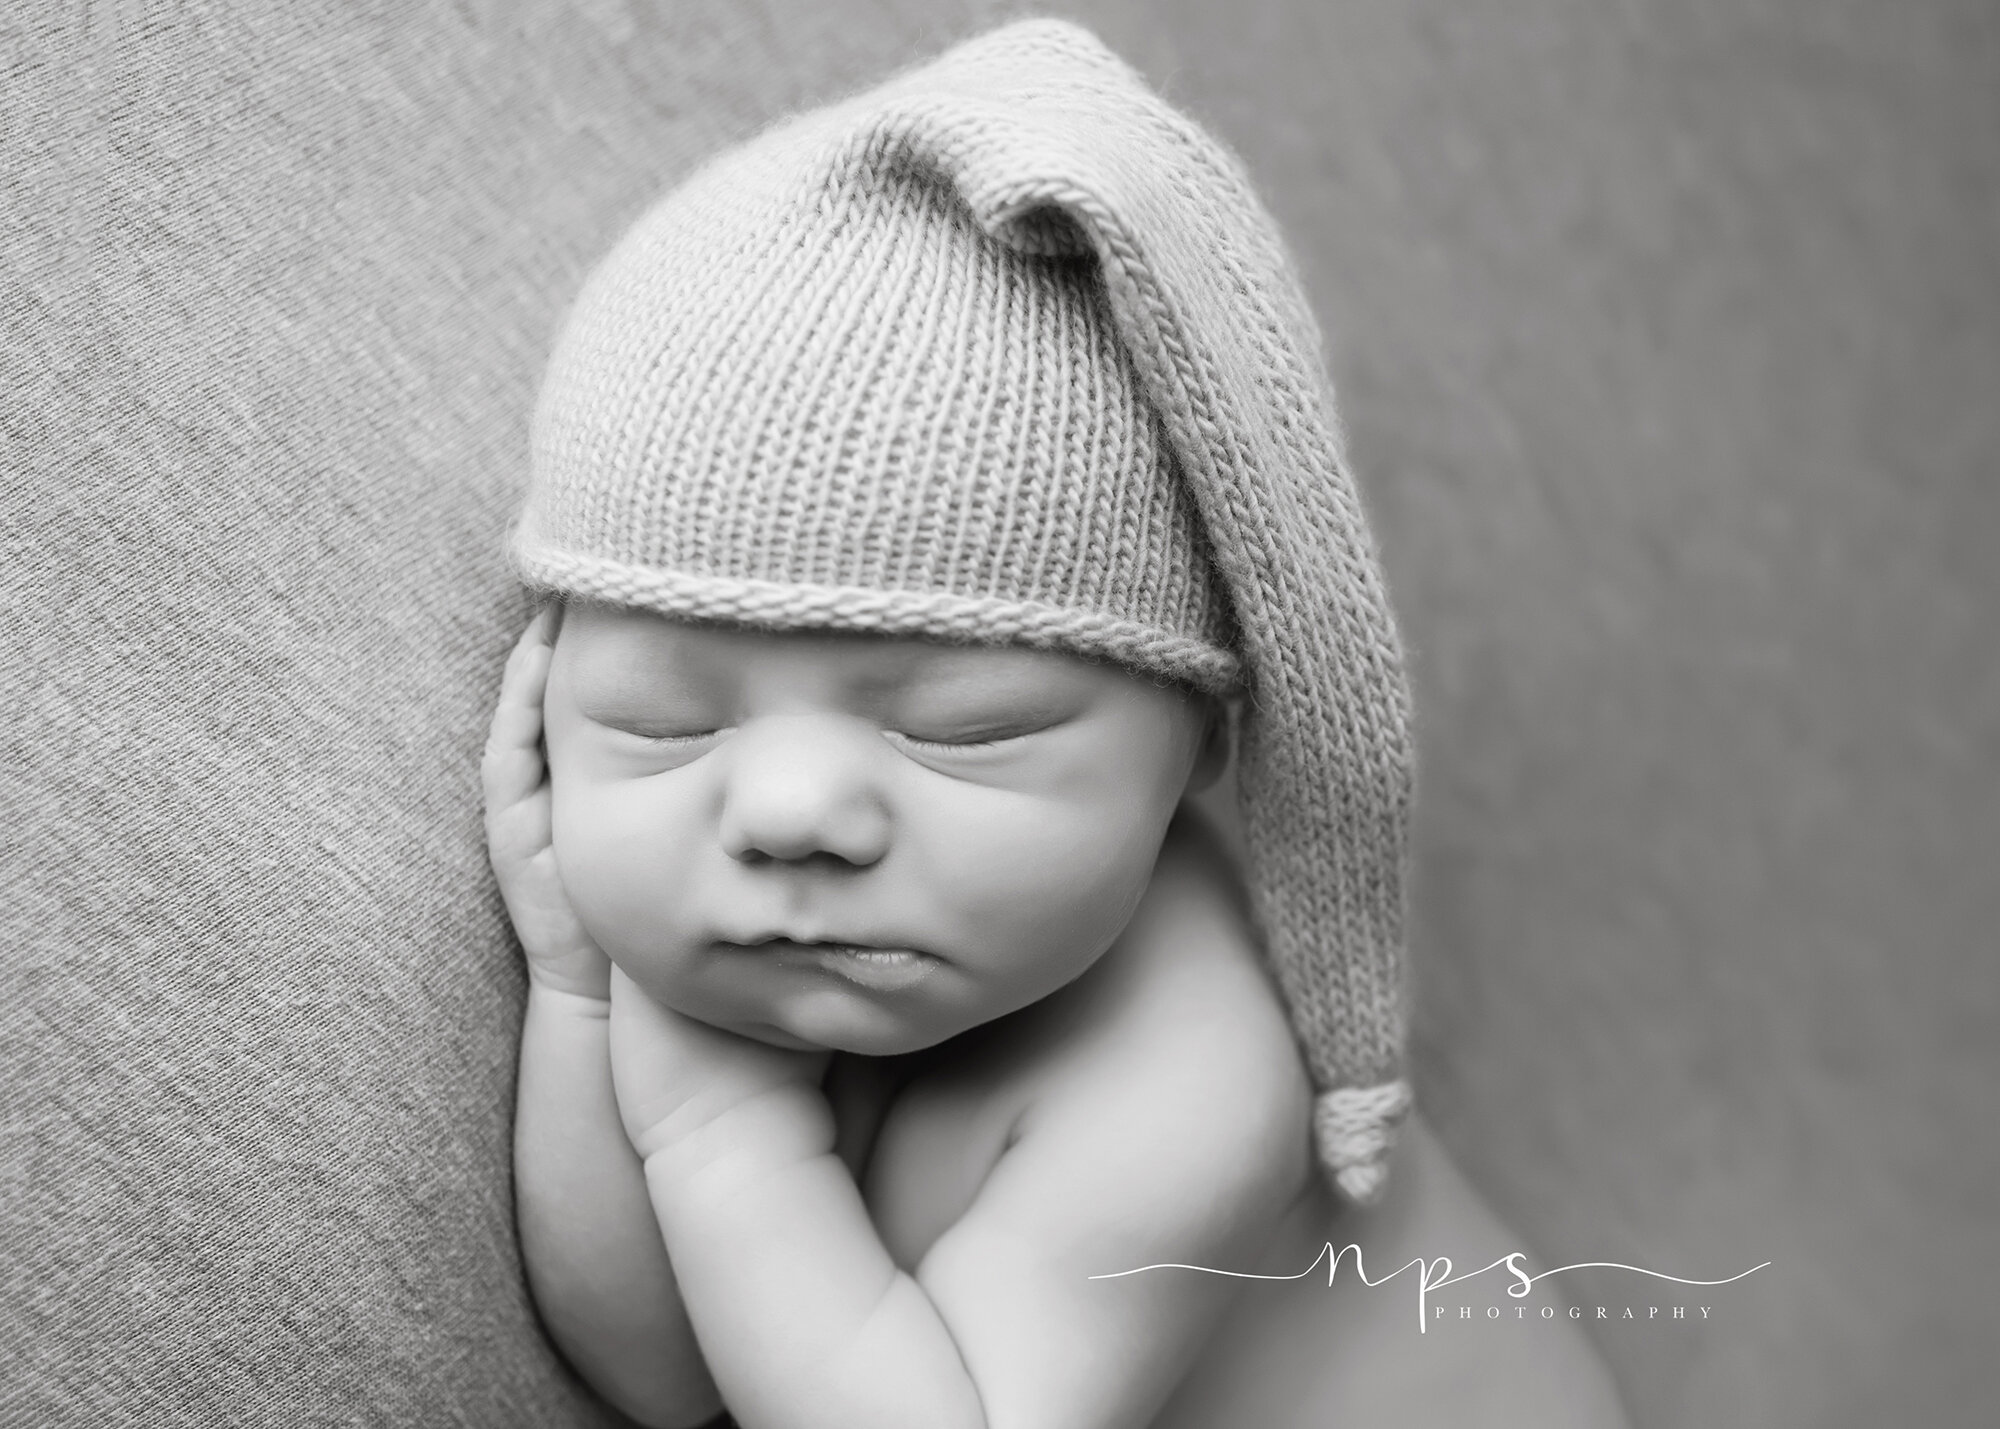 NPS-Photography-Raeford Newborn Photographer-Baby-L-003